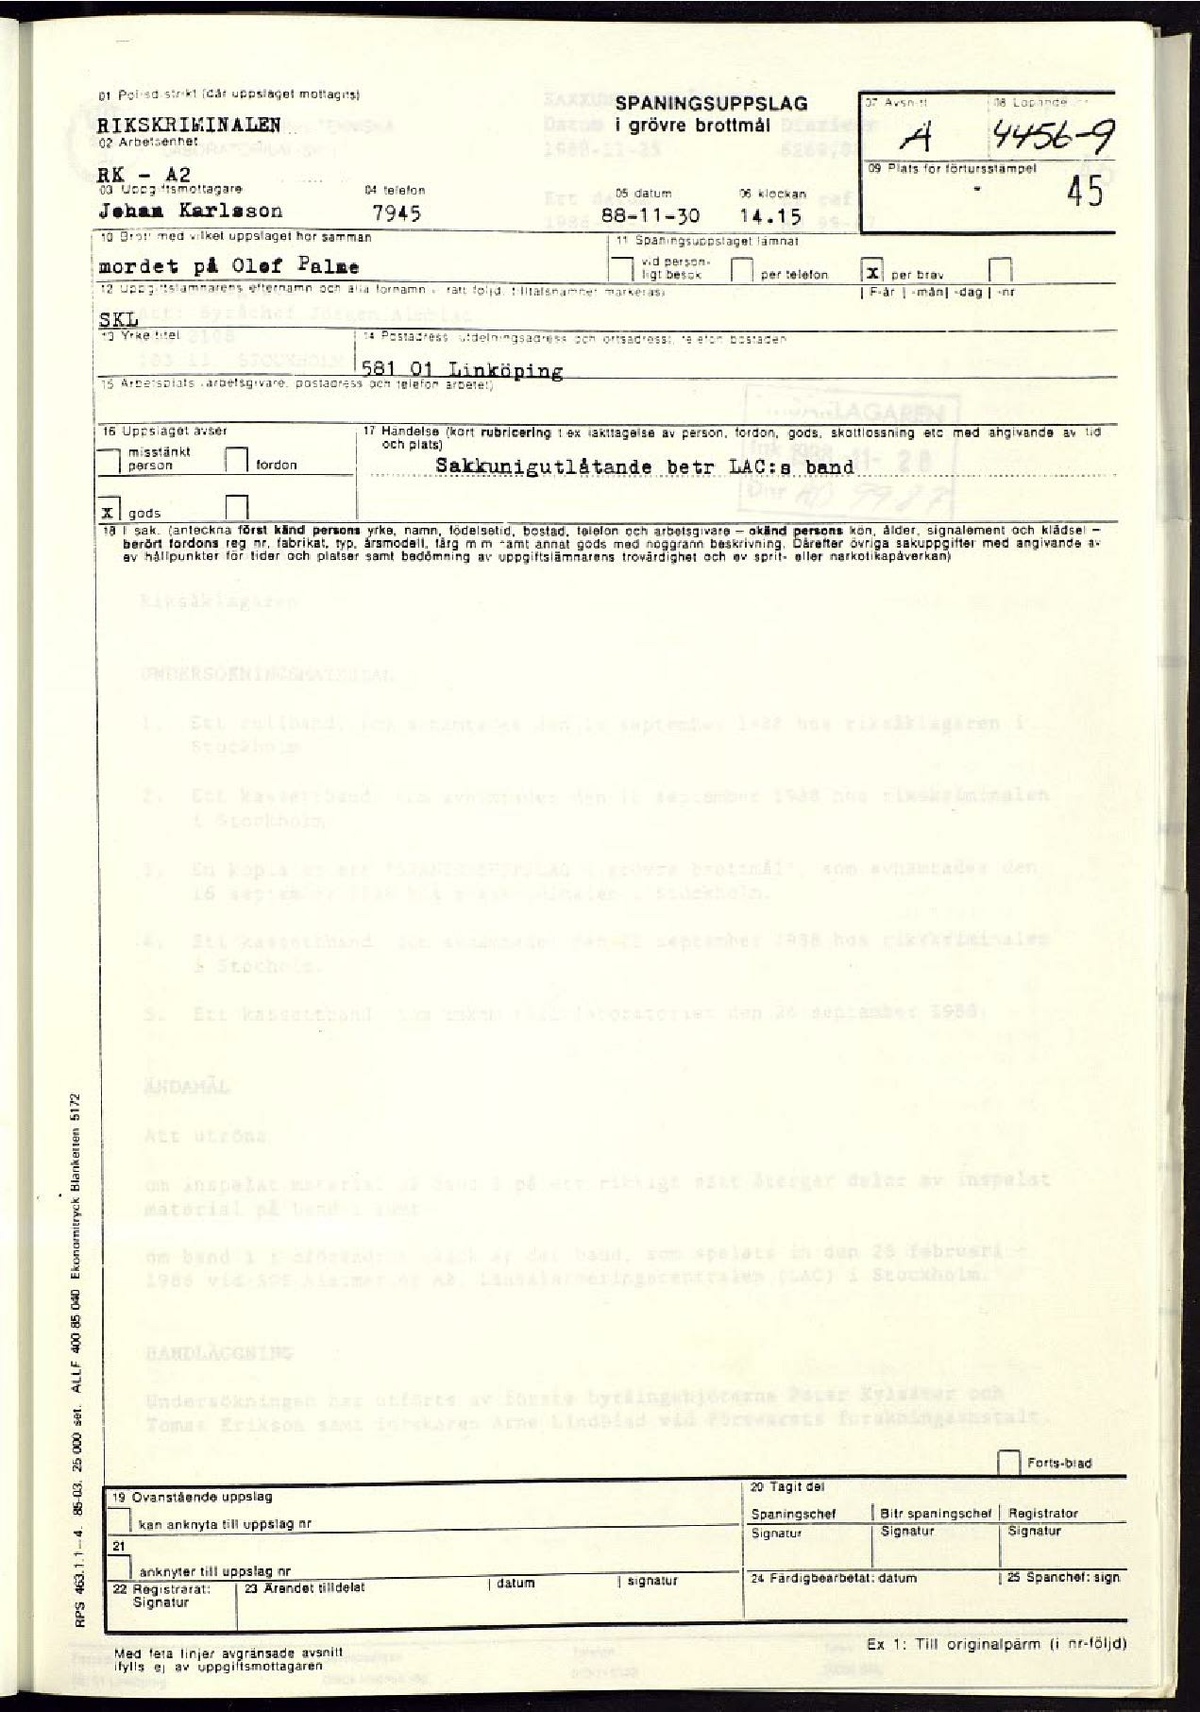 Pol-1988-11-30 1415 A4456-09 Sakkunnigutlåtande LAC-bandet.pdf